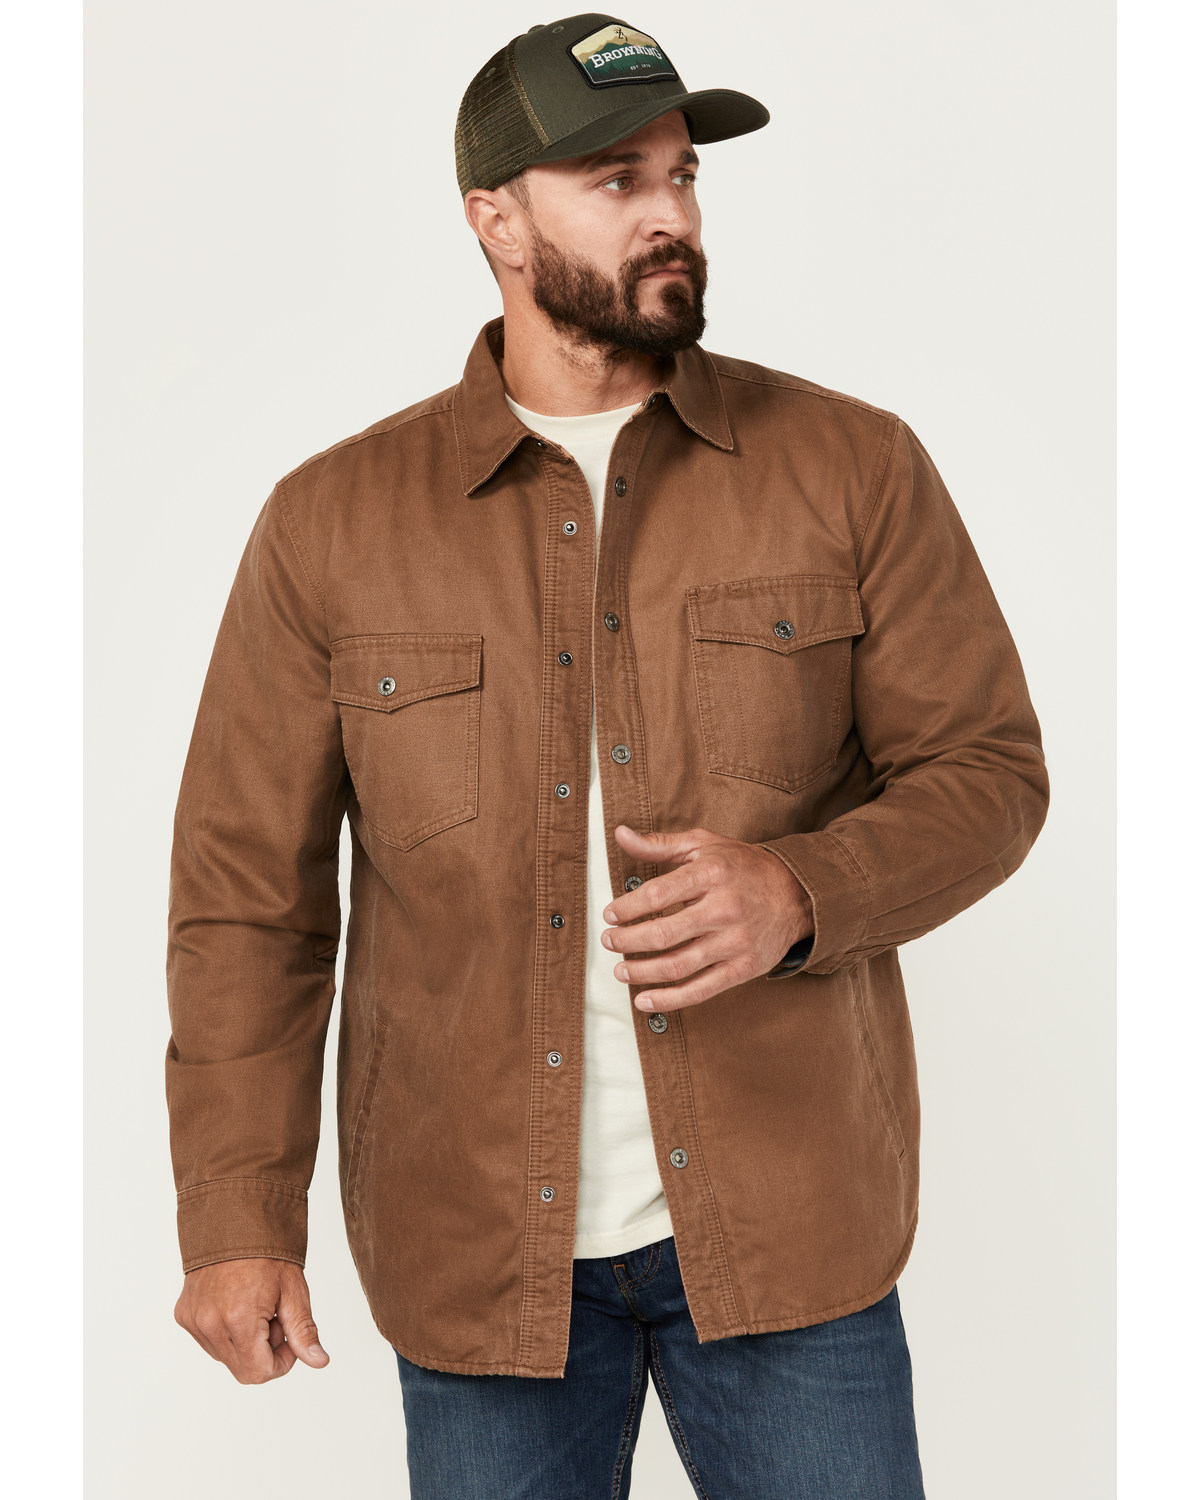 Dakota Grizzly Men's Blaize Microsuede Lined Long Sleeve Western Snap Shirt